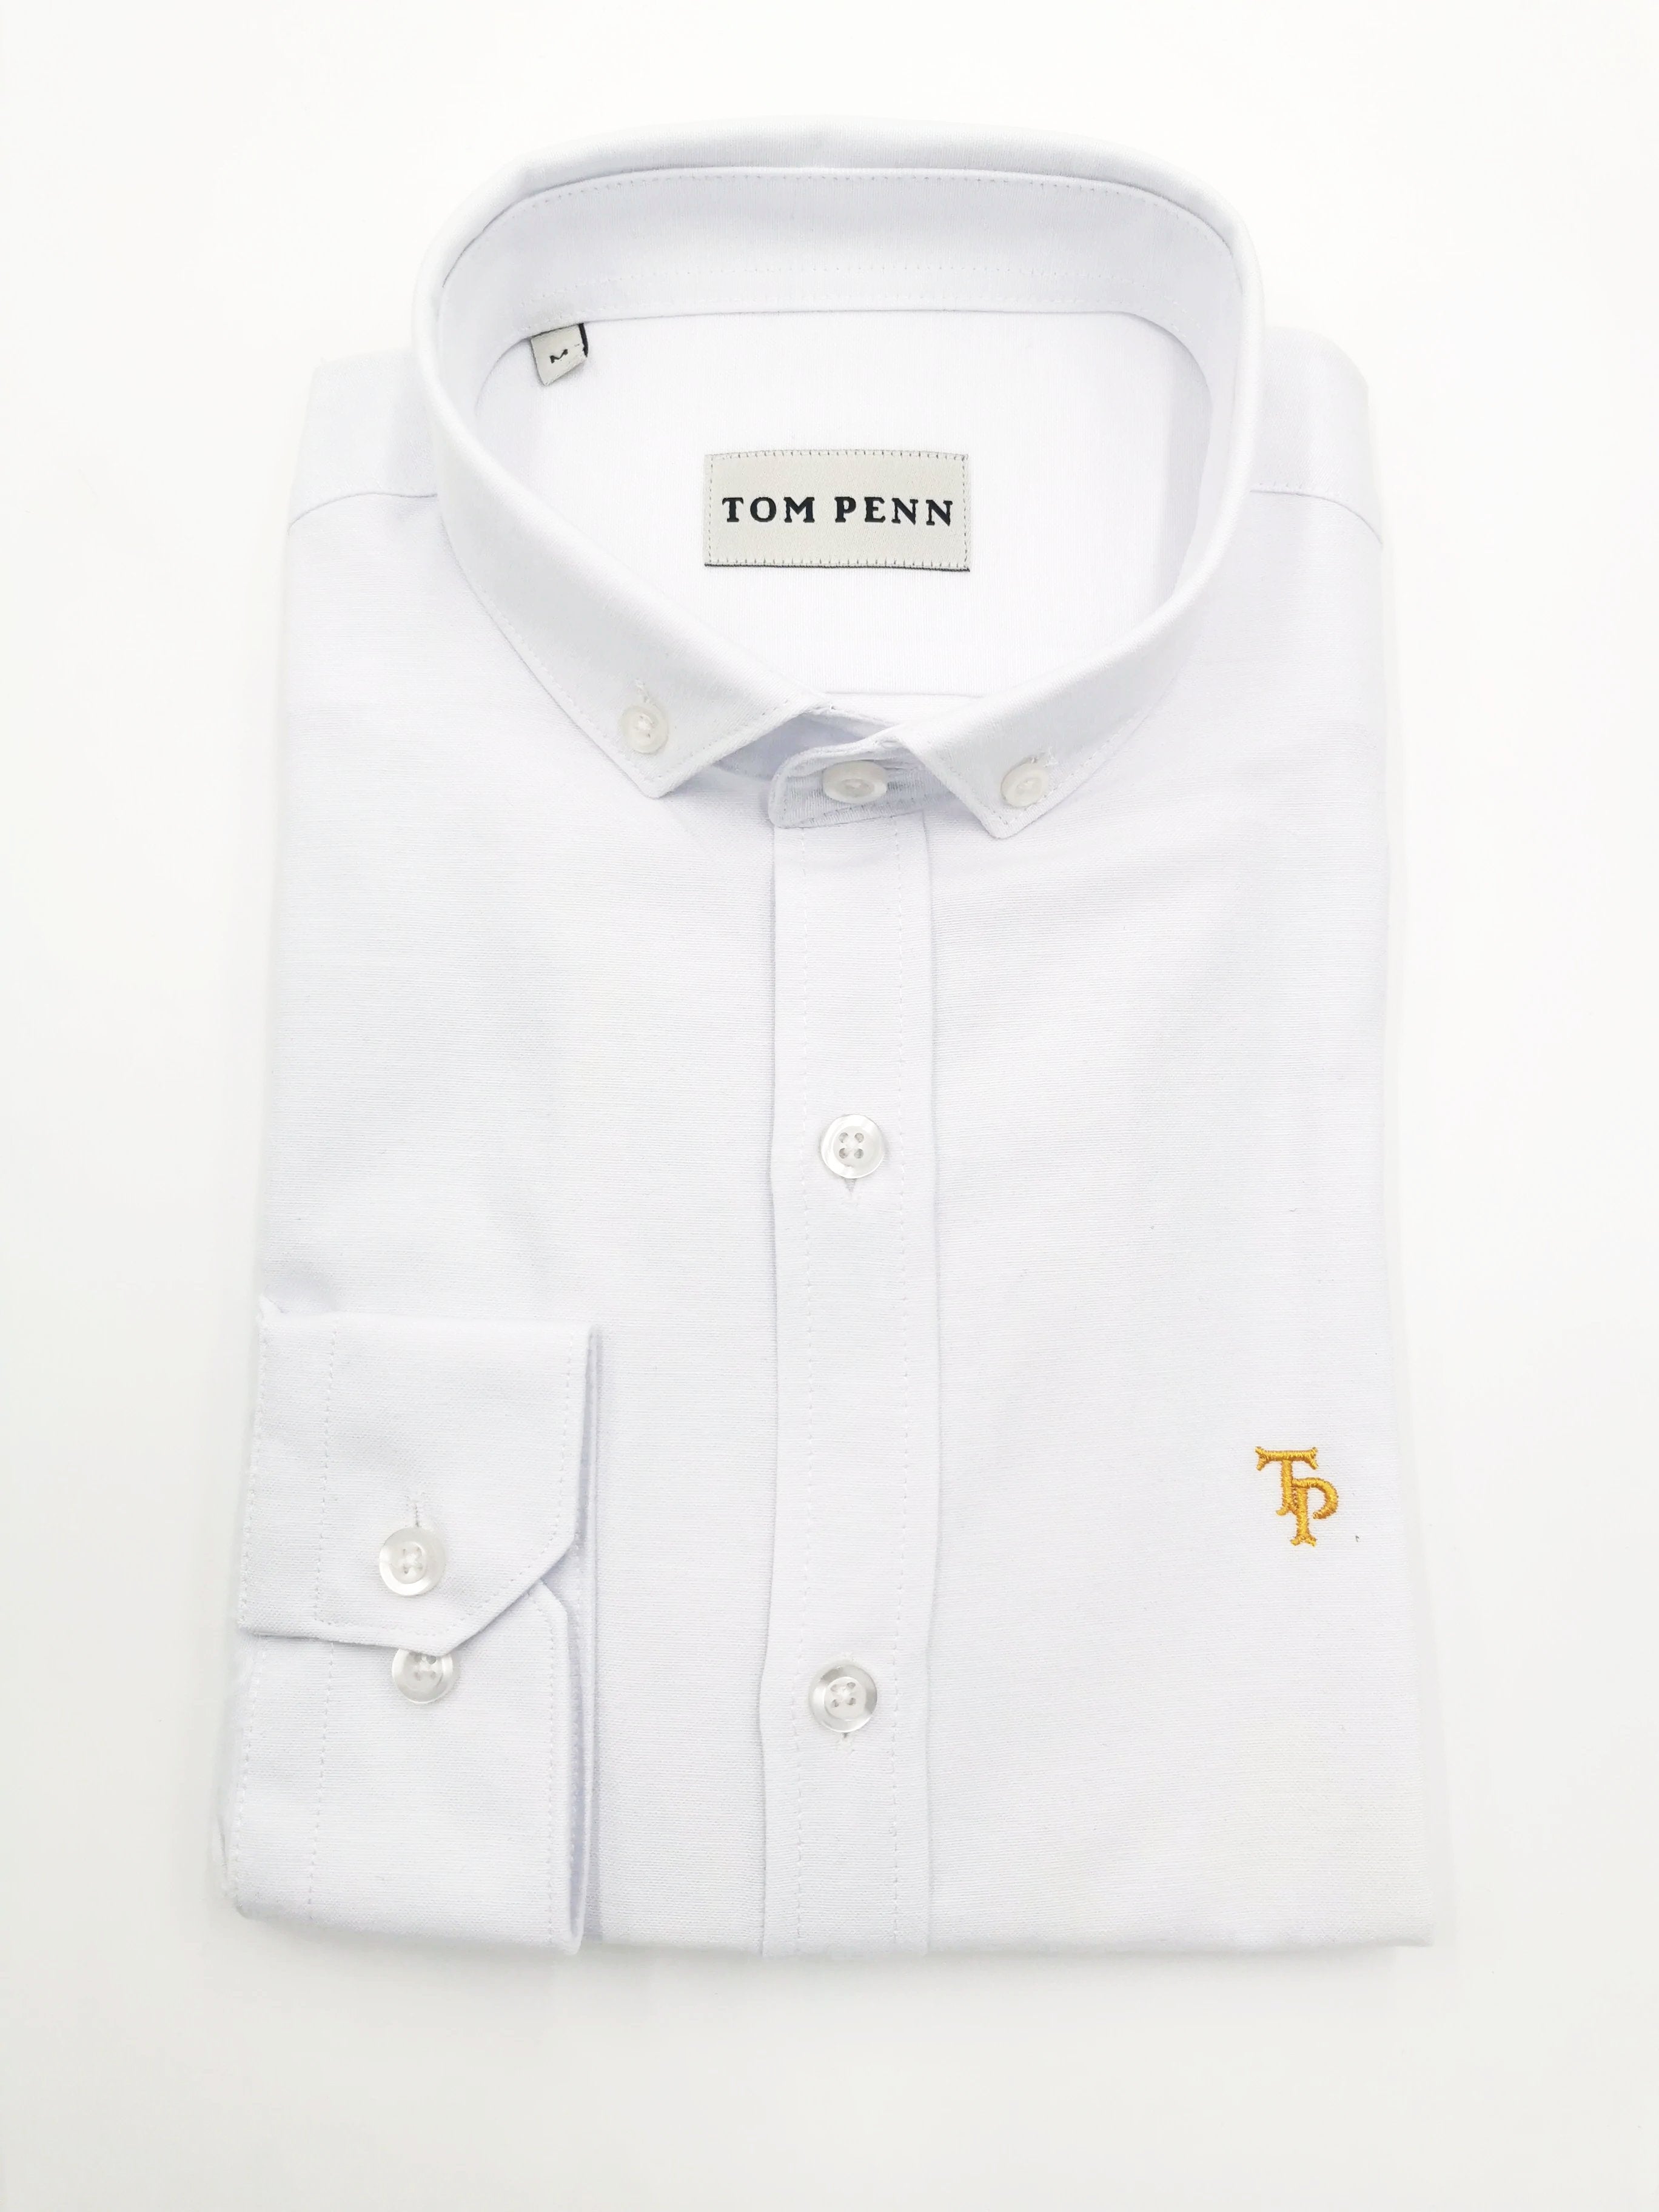 Tom Penn Slim fit Button Down White Shirt